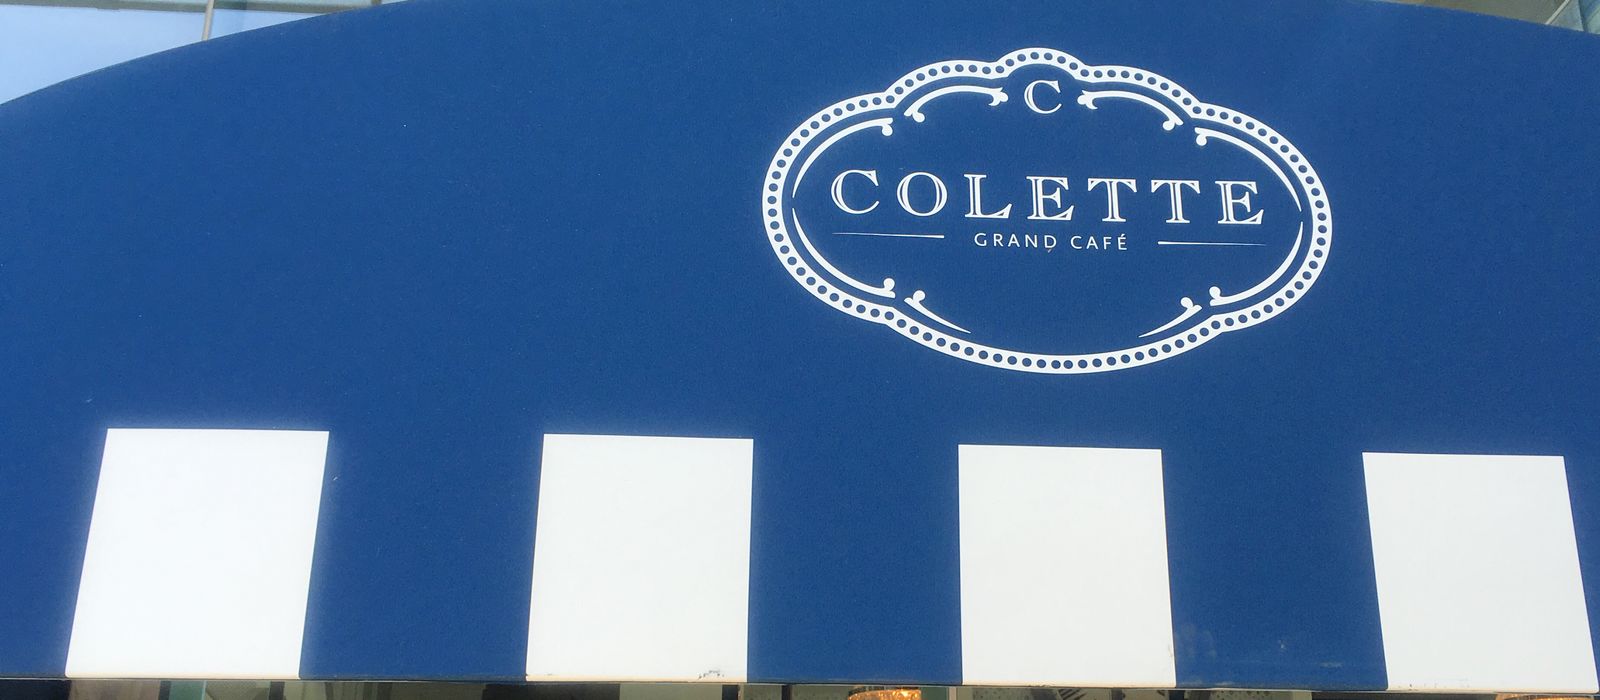 Eingang zum Colette Grand Café